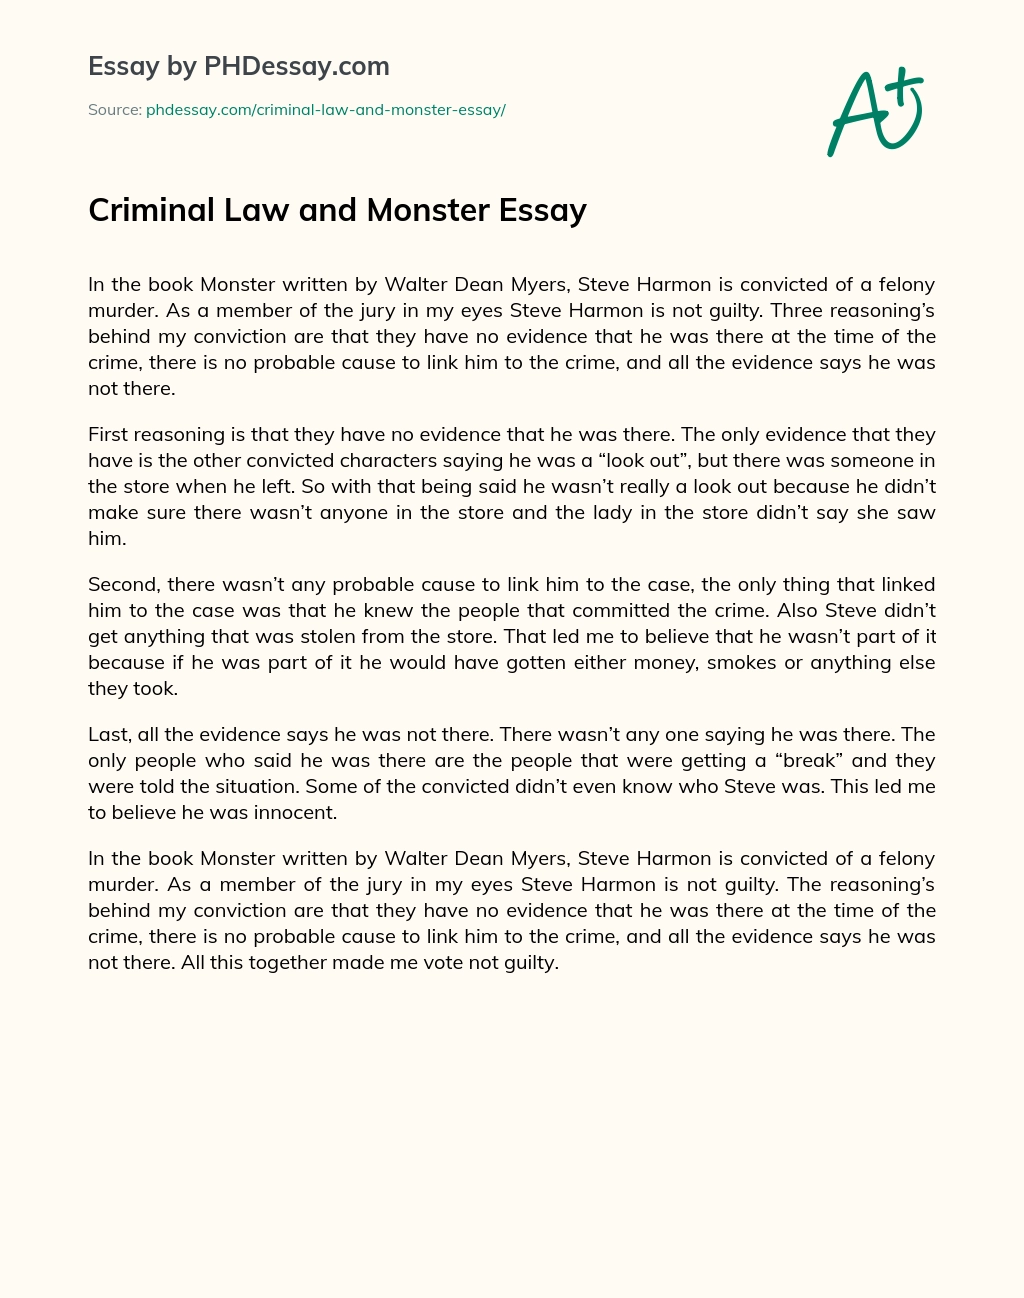 Criminal Law and Monster Essay essay